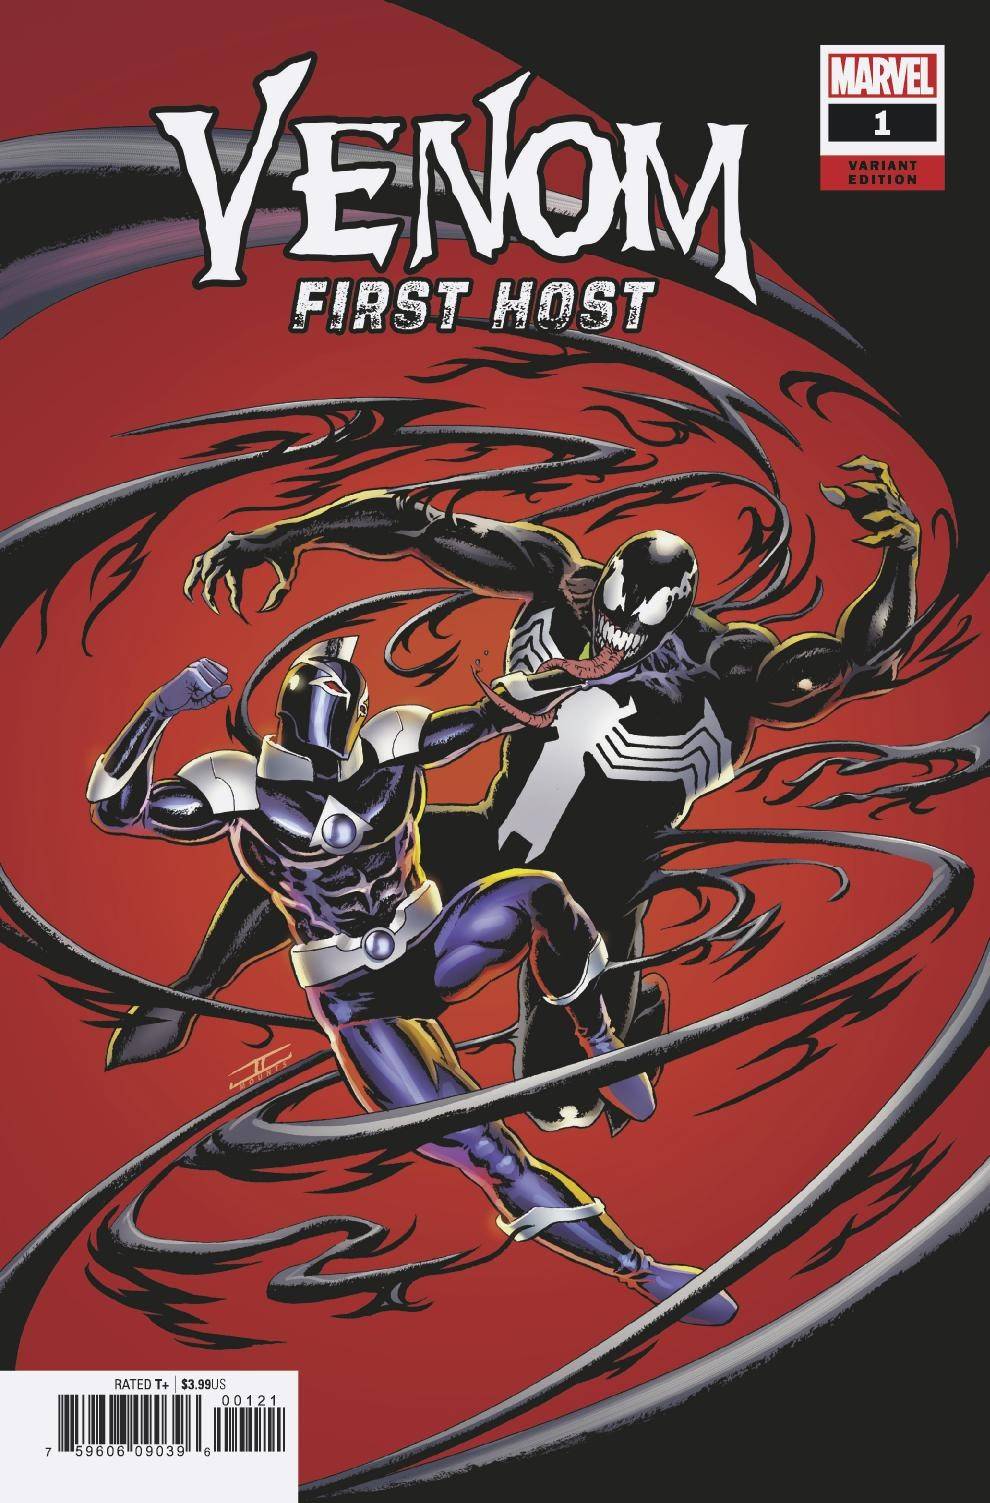 Venom First Host #1, variant cover de John Cassaday (Marvel Comics)